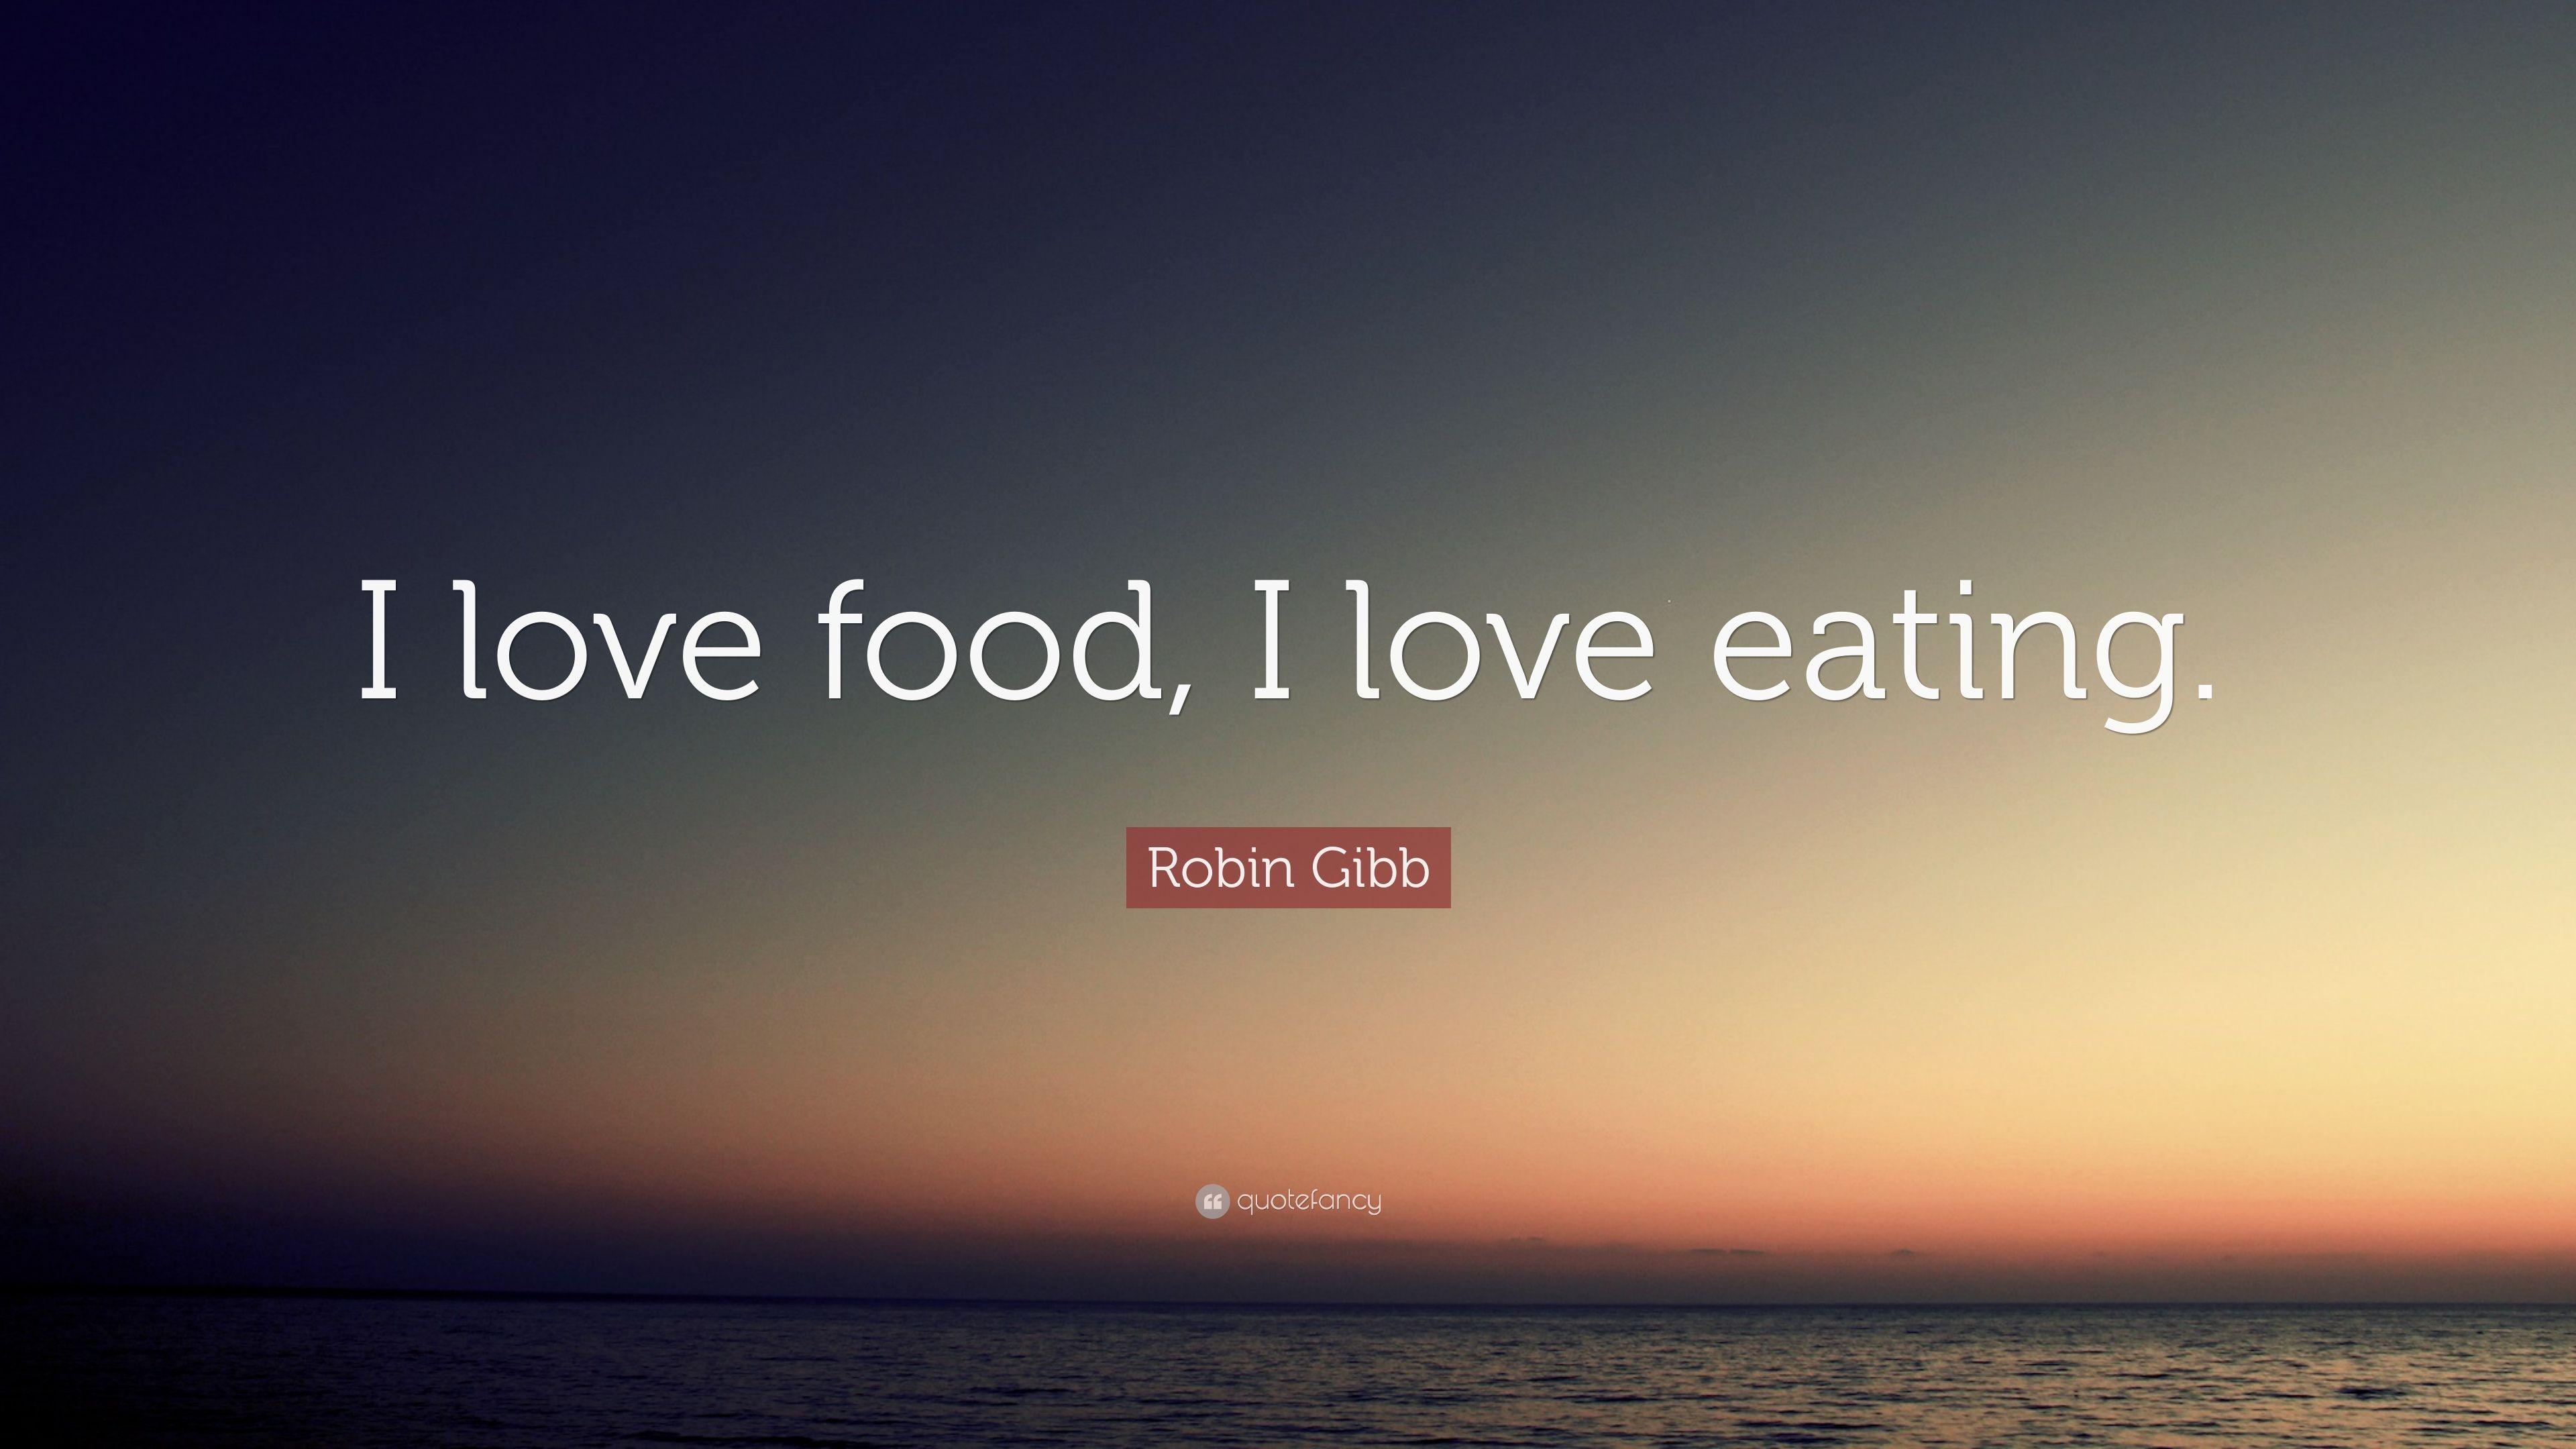 Robin Gibb Quote: “I love food, I love eating.” 12 wallpaper